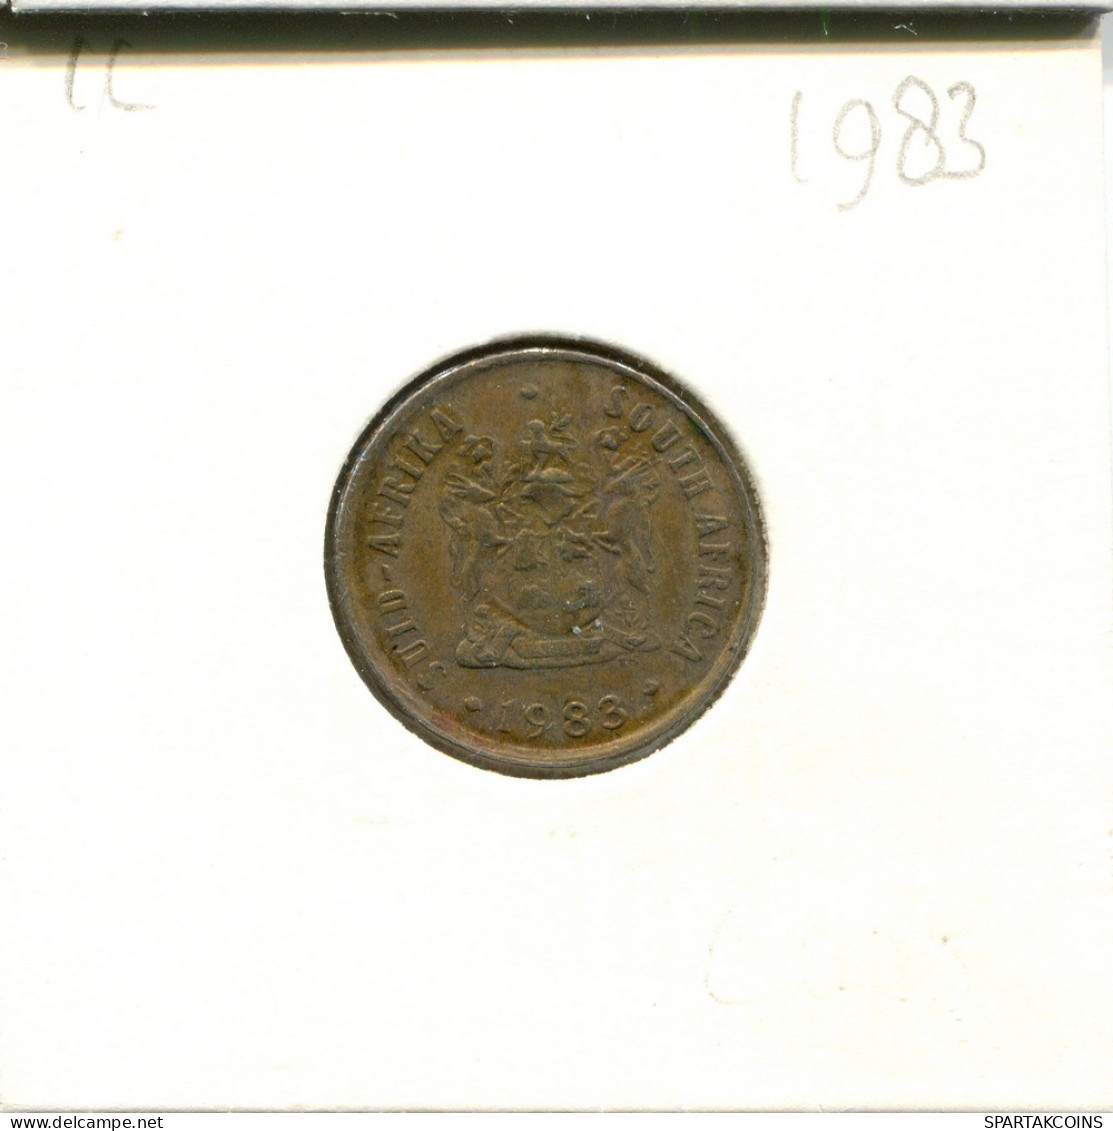 1 CENT 1983 SOUTH AFRICA Coin #AT084.U.A - Afrique Du Sud